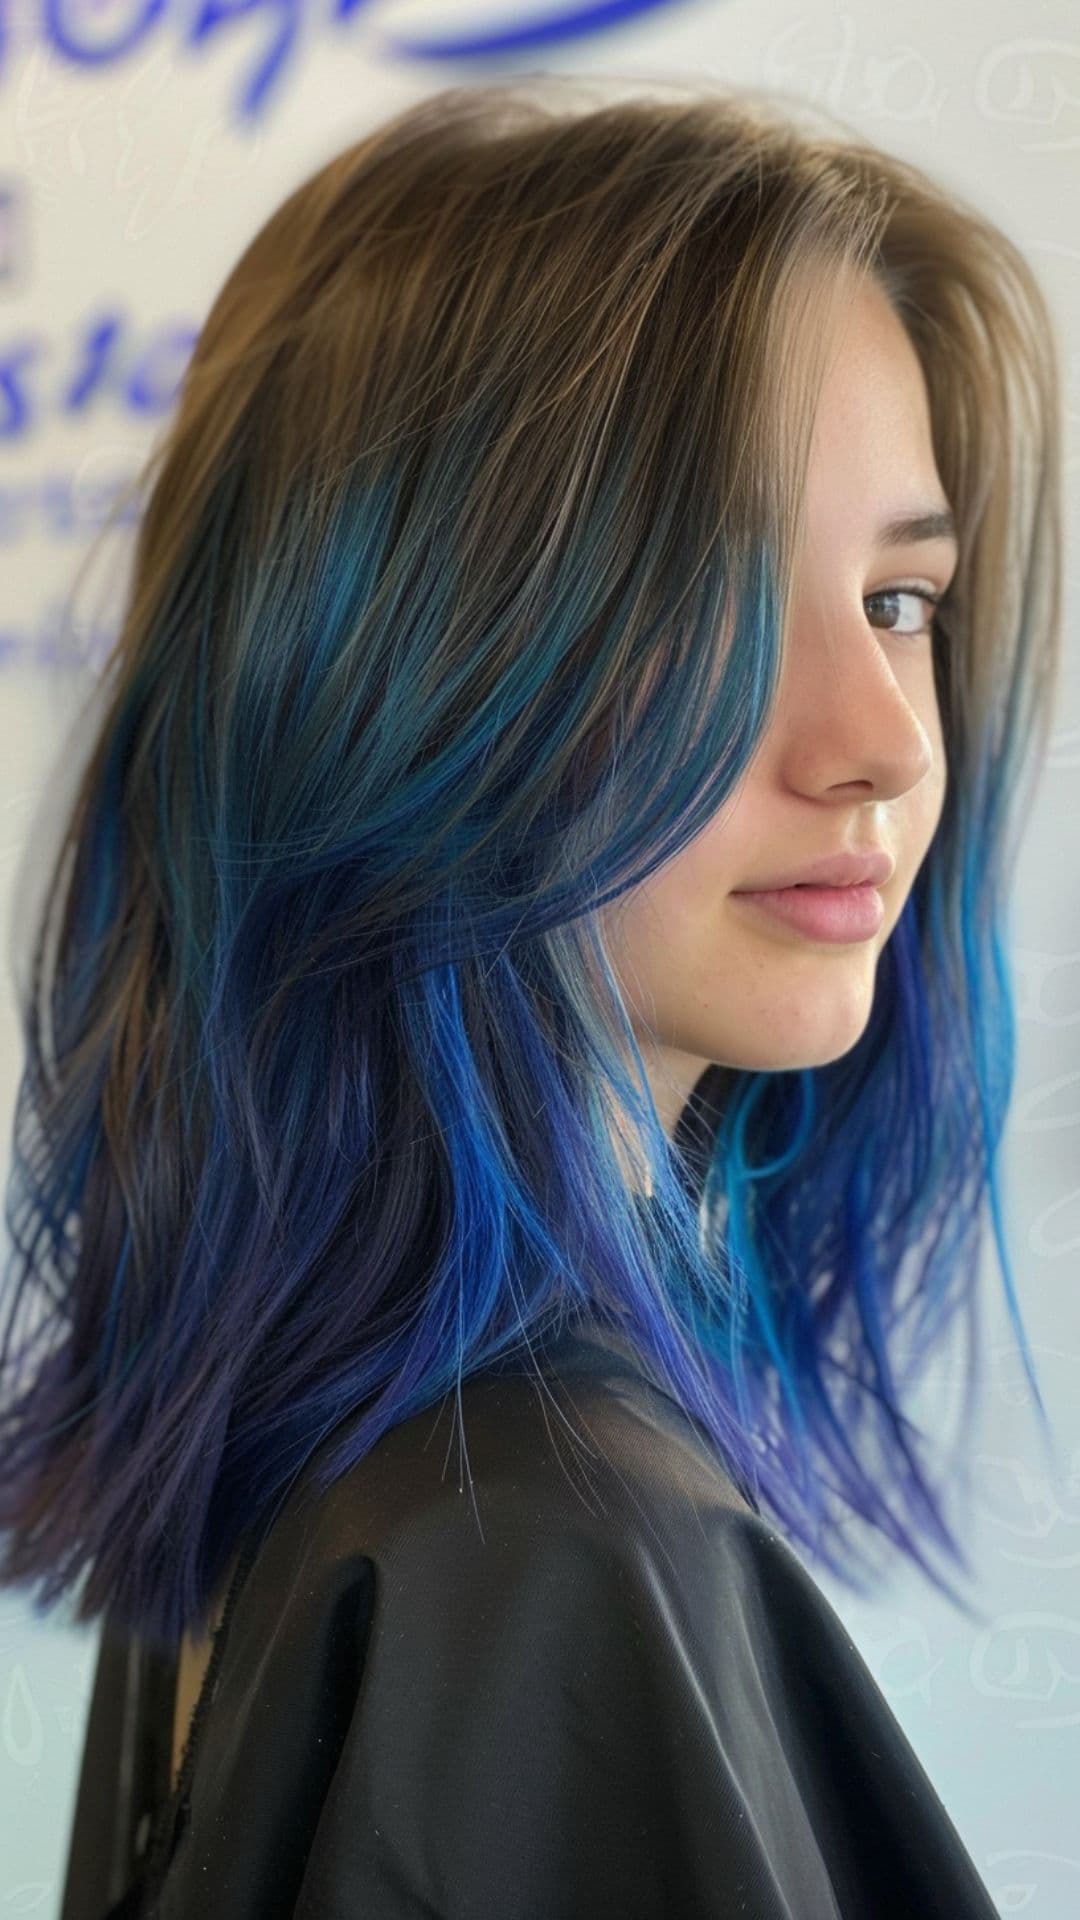 A teen girl modelling an electric blue hair.